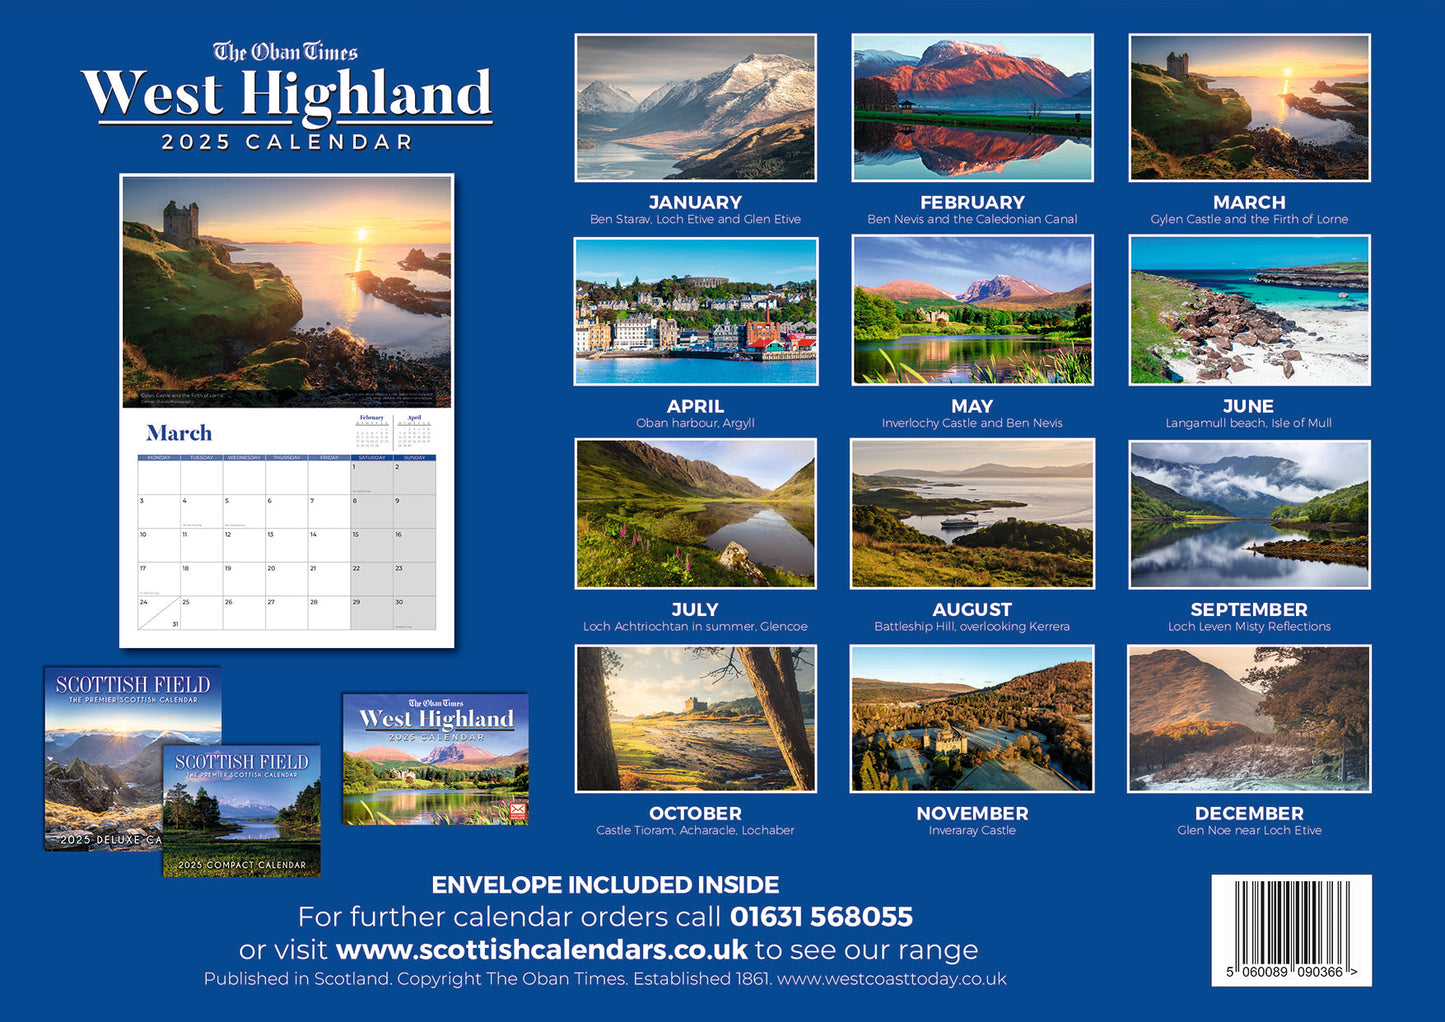 Oban Times' West Highland Calendar 2025